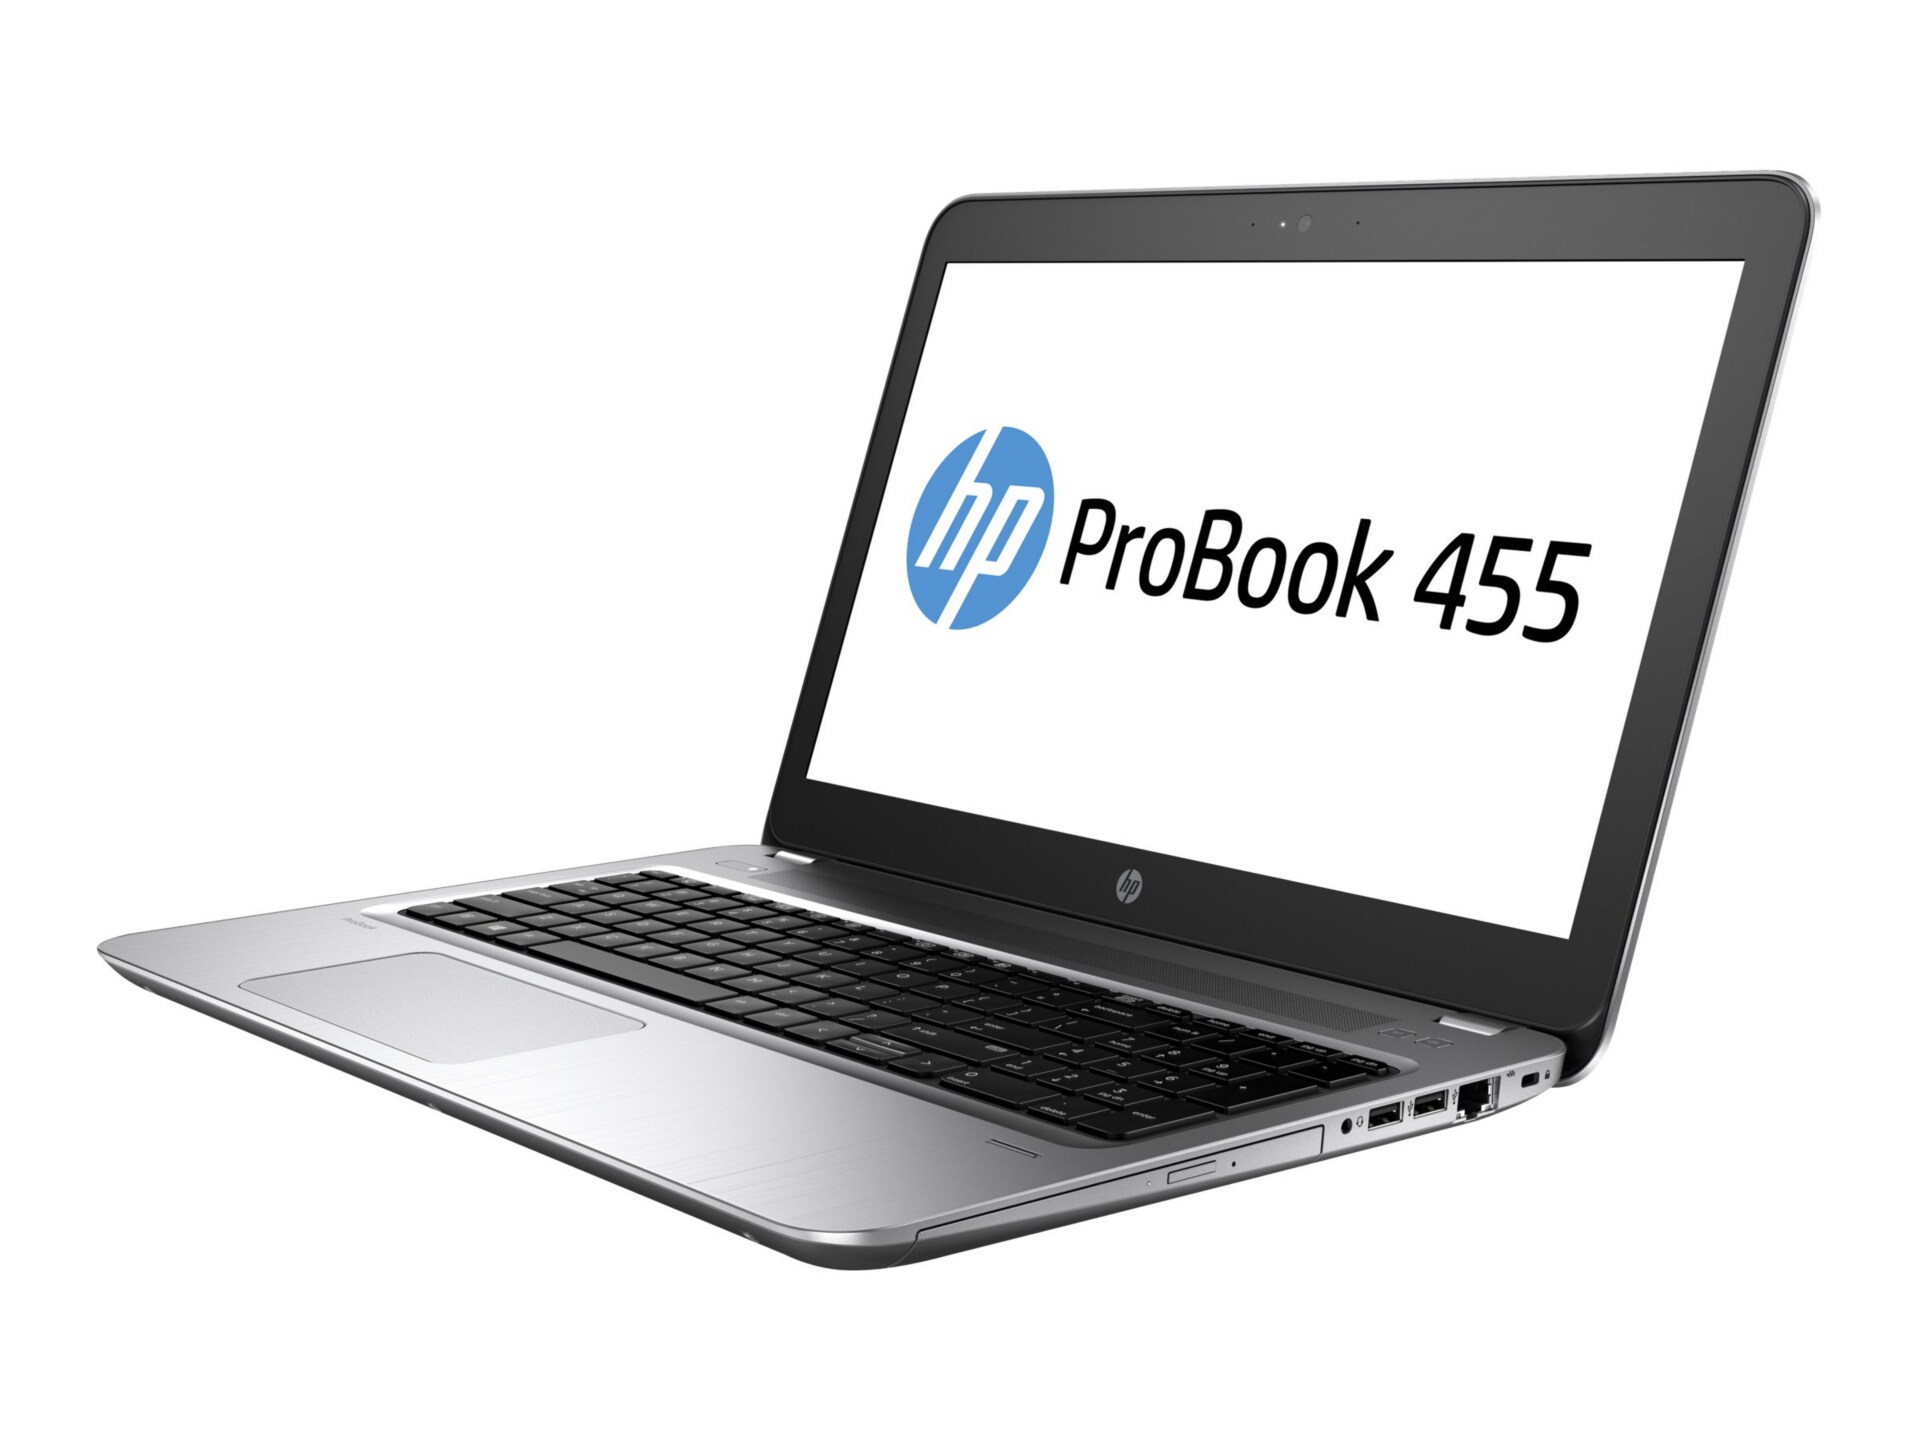 HP ProBook 455 G4 - 15.6" - A10 9600P - 8 GB RAM - 500 GB HDD - US